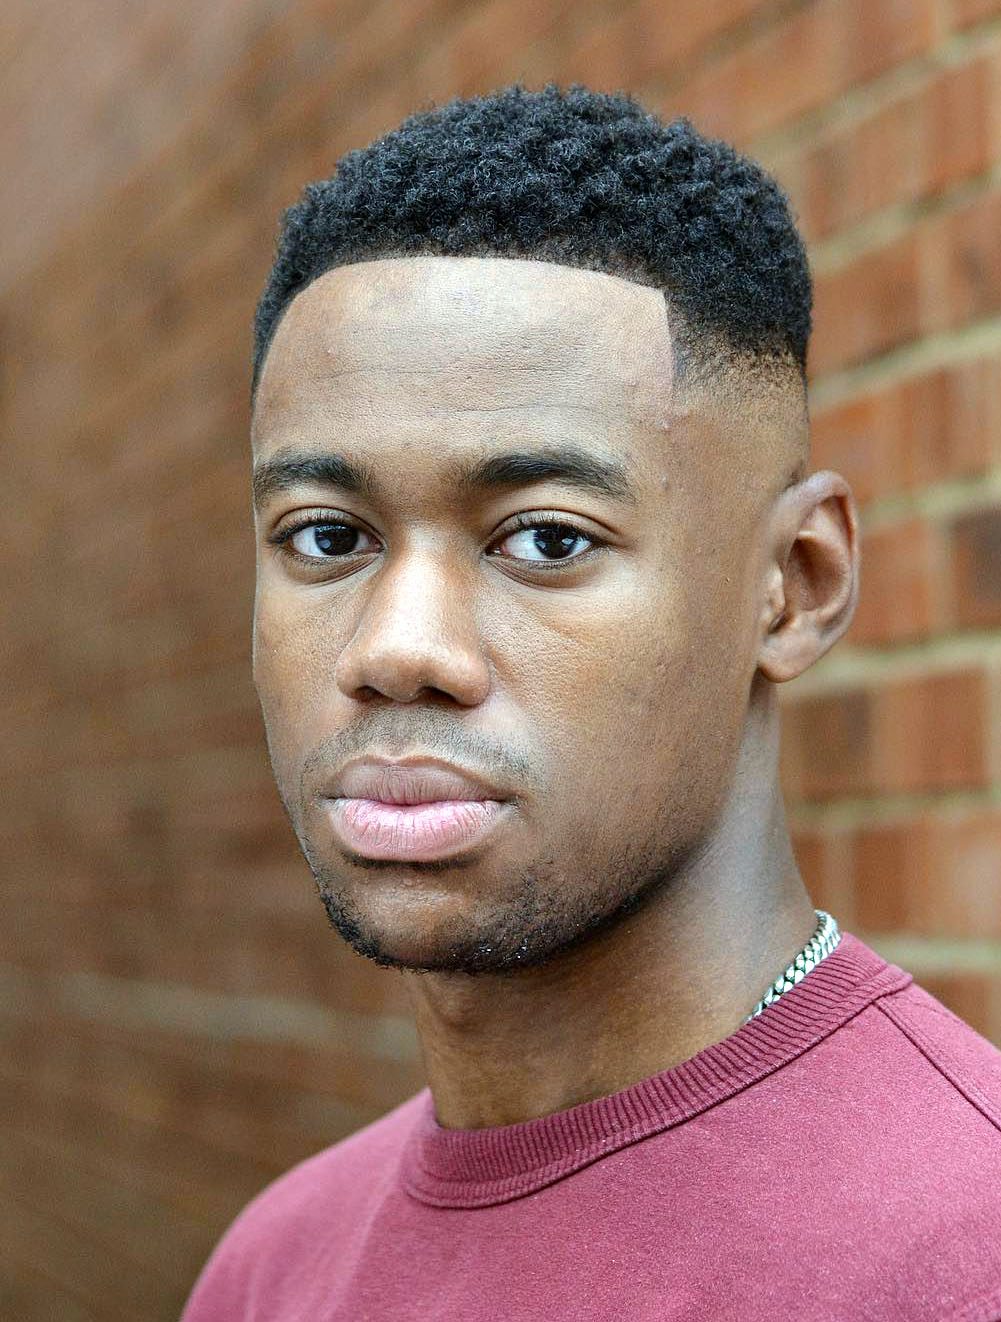 35 Iconic Haircuts for Black Men | Haircut Inspiration